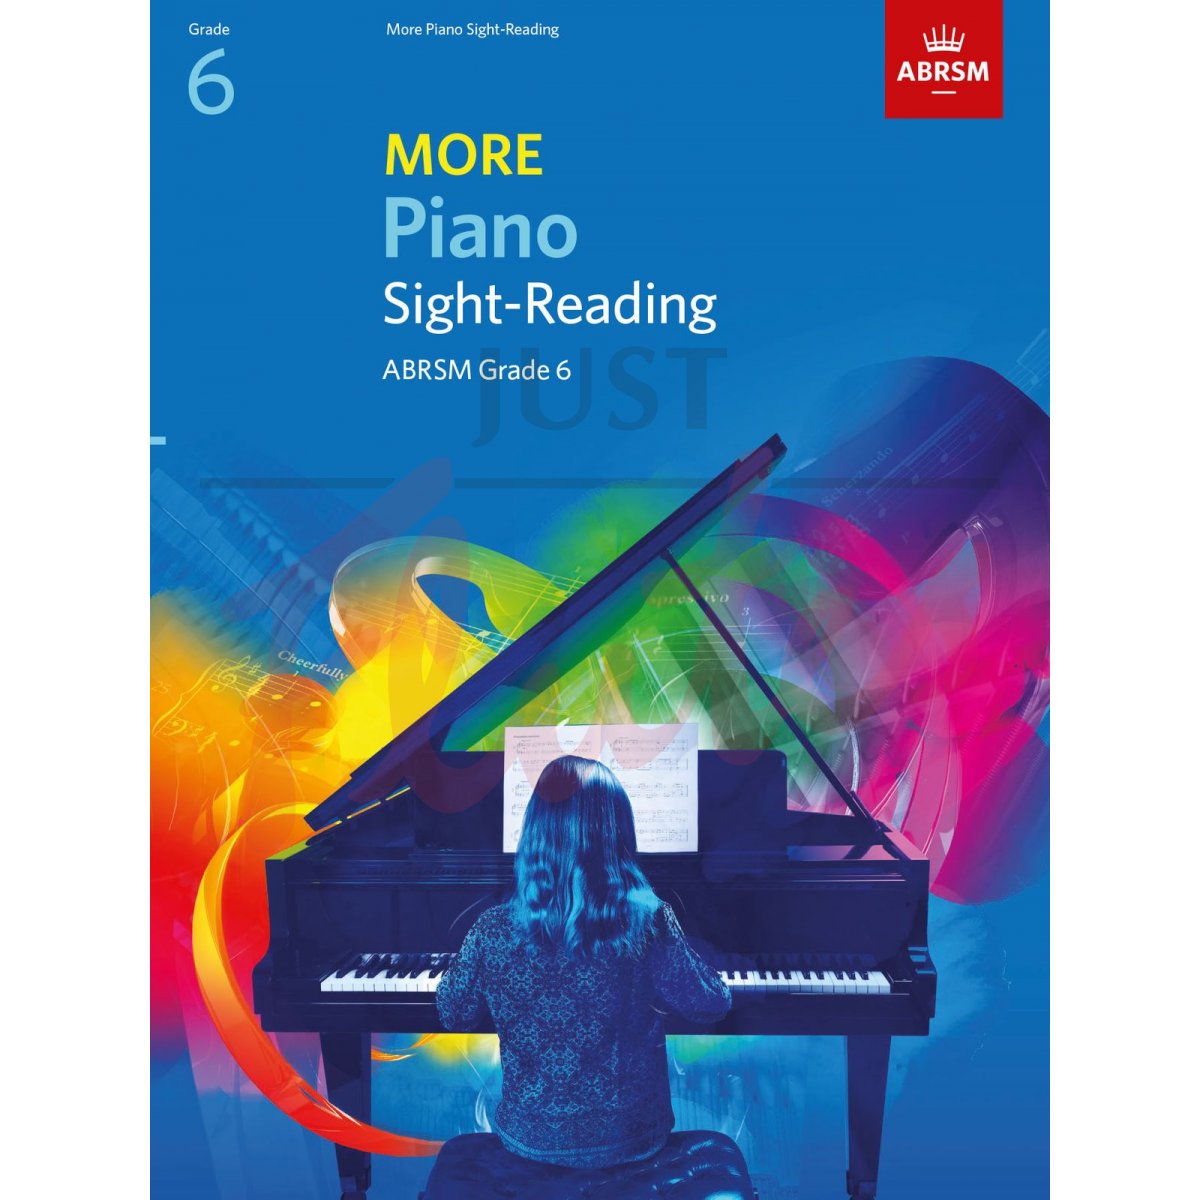 More Piano Sight-Reading Grade 6